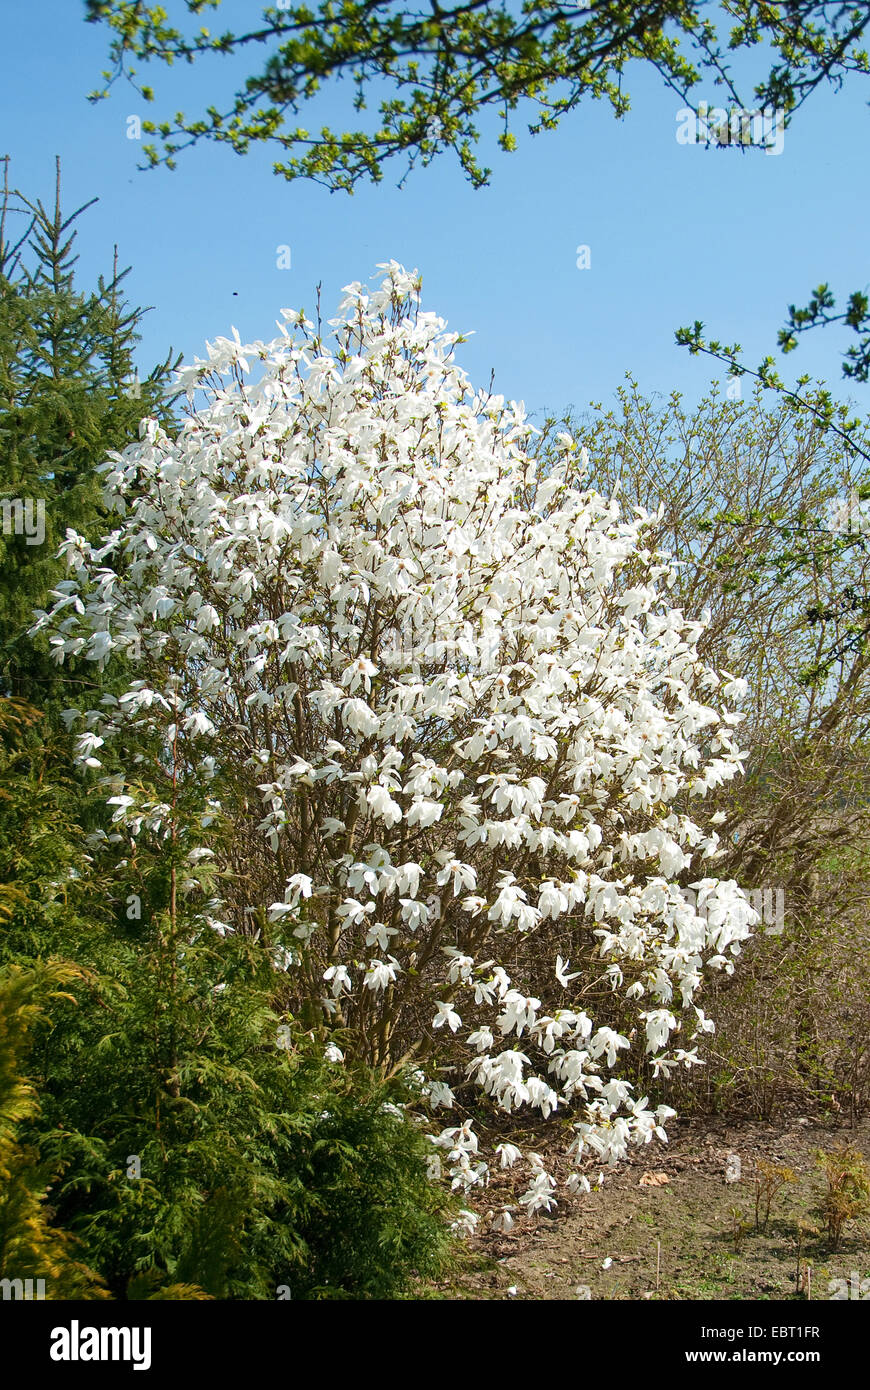 Magnolia (Magnolia "Memoria" de la ama, Magnolia ama), cultivar la memoria de memoria de la ama, floreciendo Foto de stock